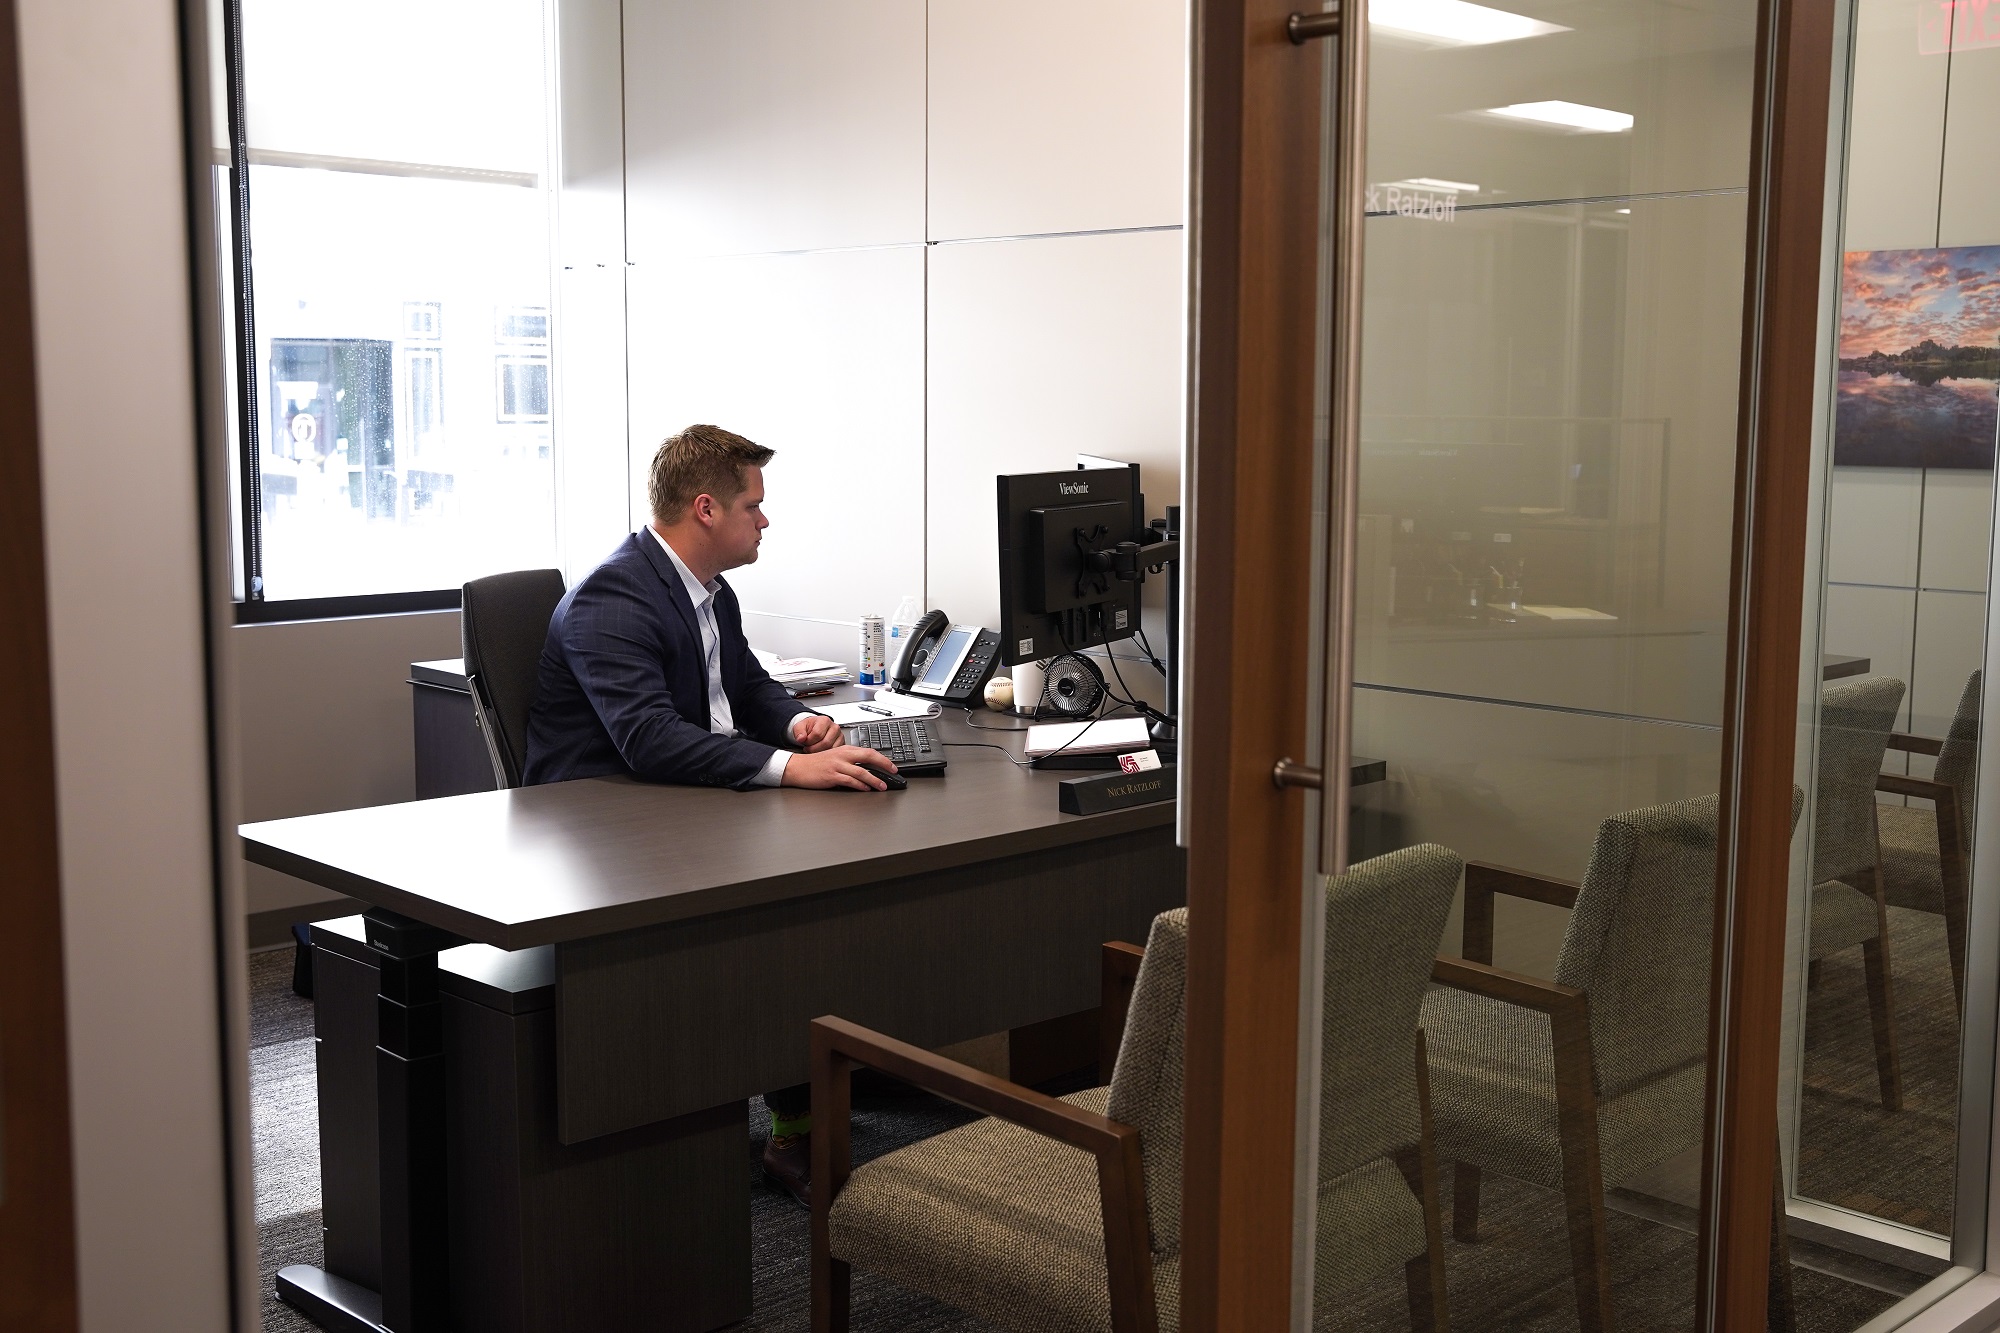 Wealth Advisor Nick Ratzloff is hard at work in his new office.